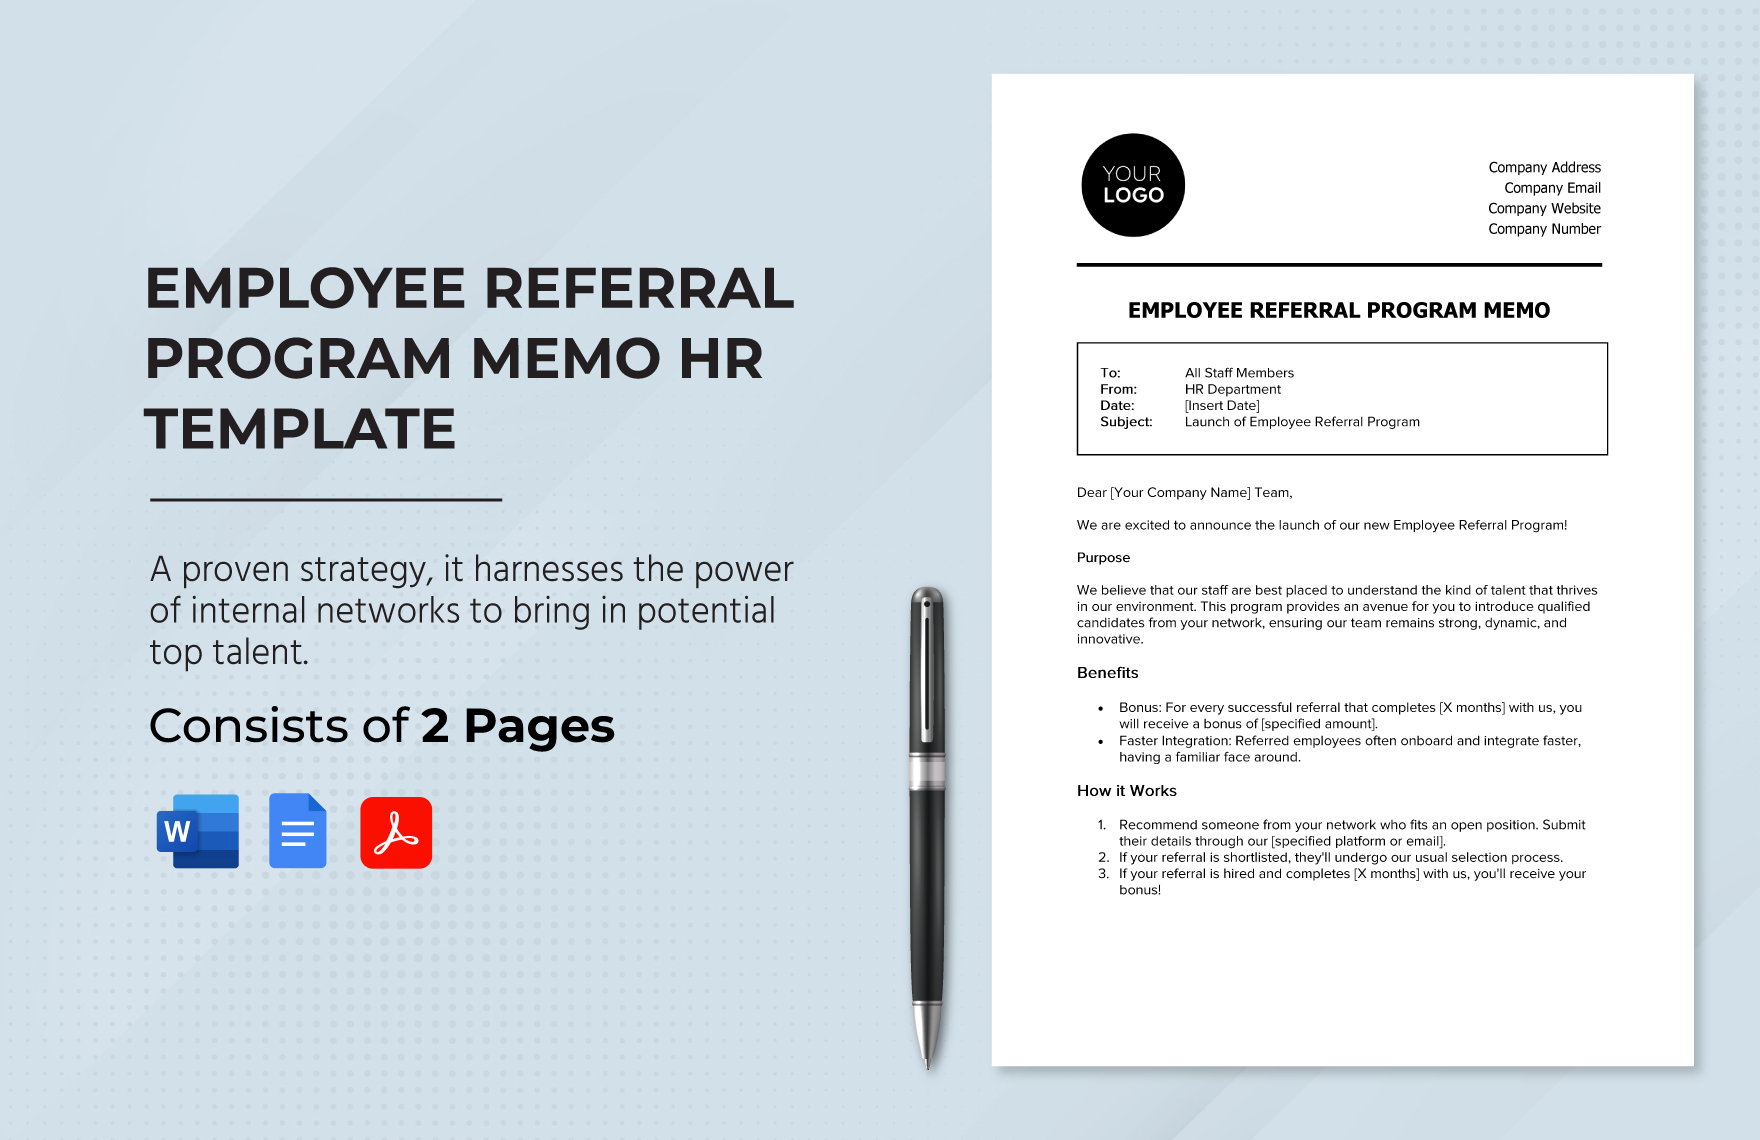 Employee Referral Program Memo HR Template